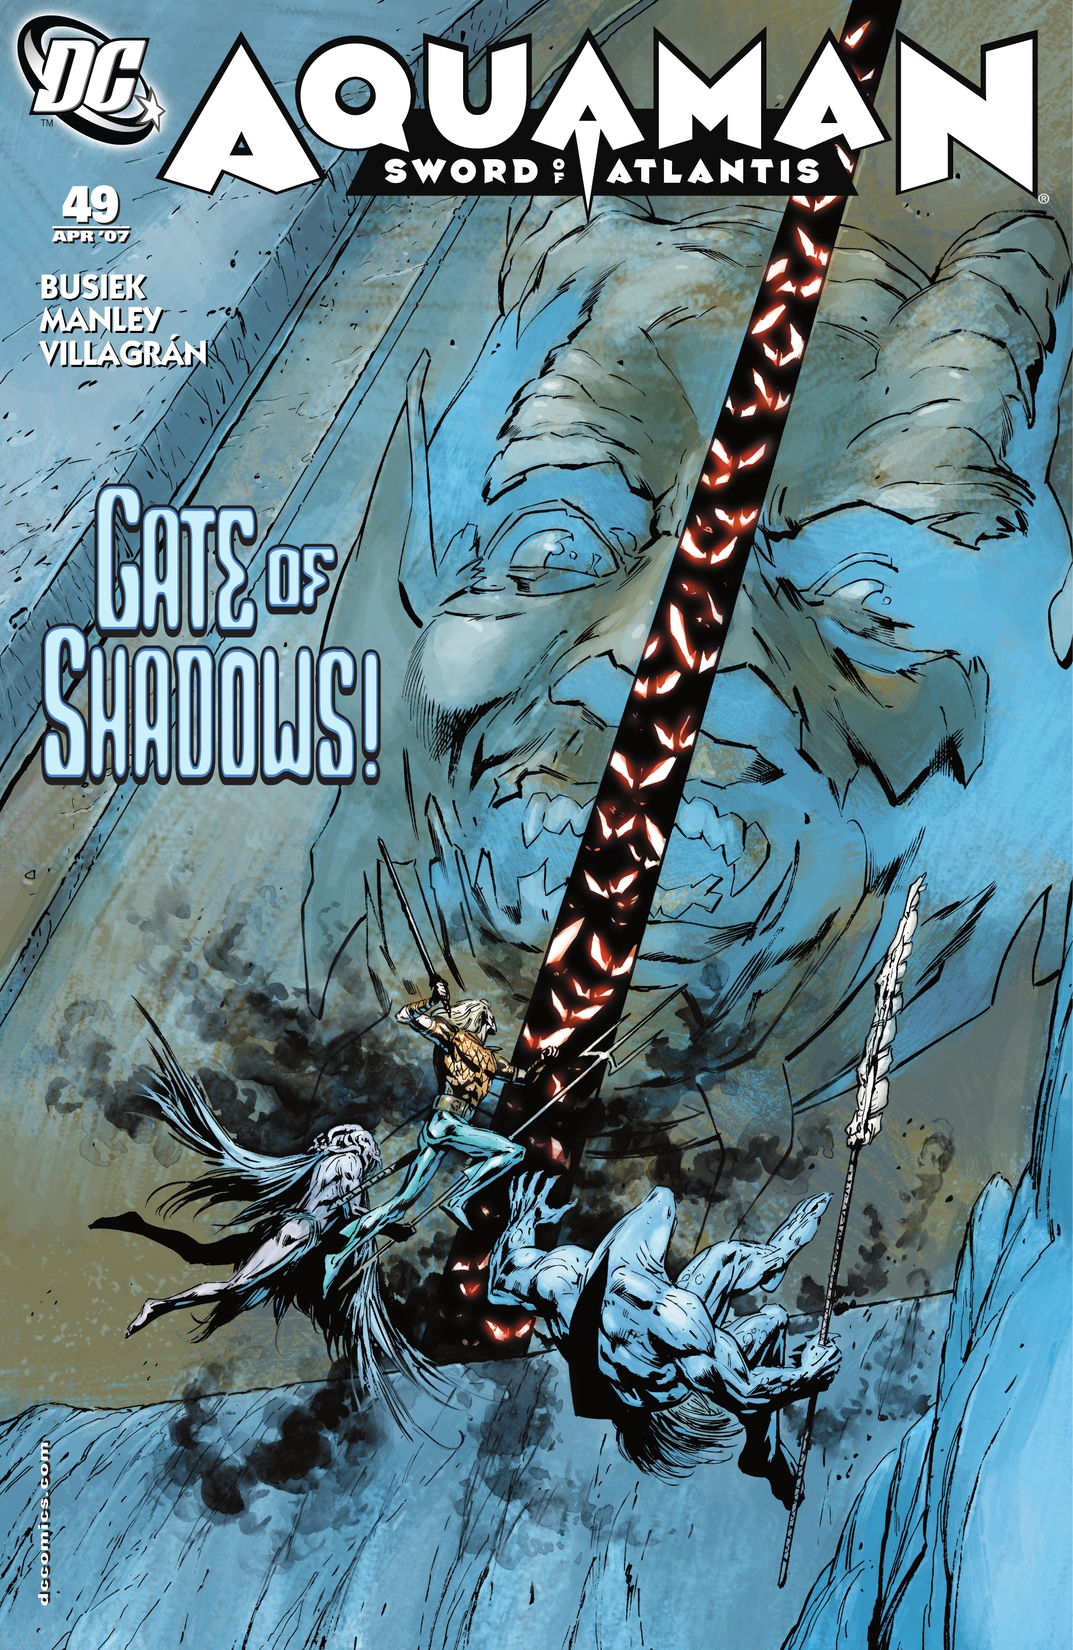 Aquaman: Sword of Atlantis #49 preview images